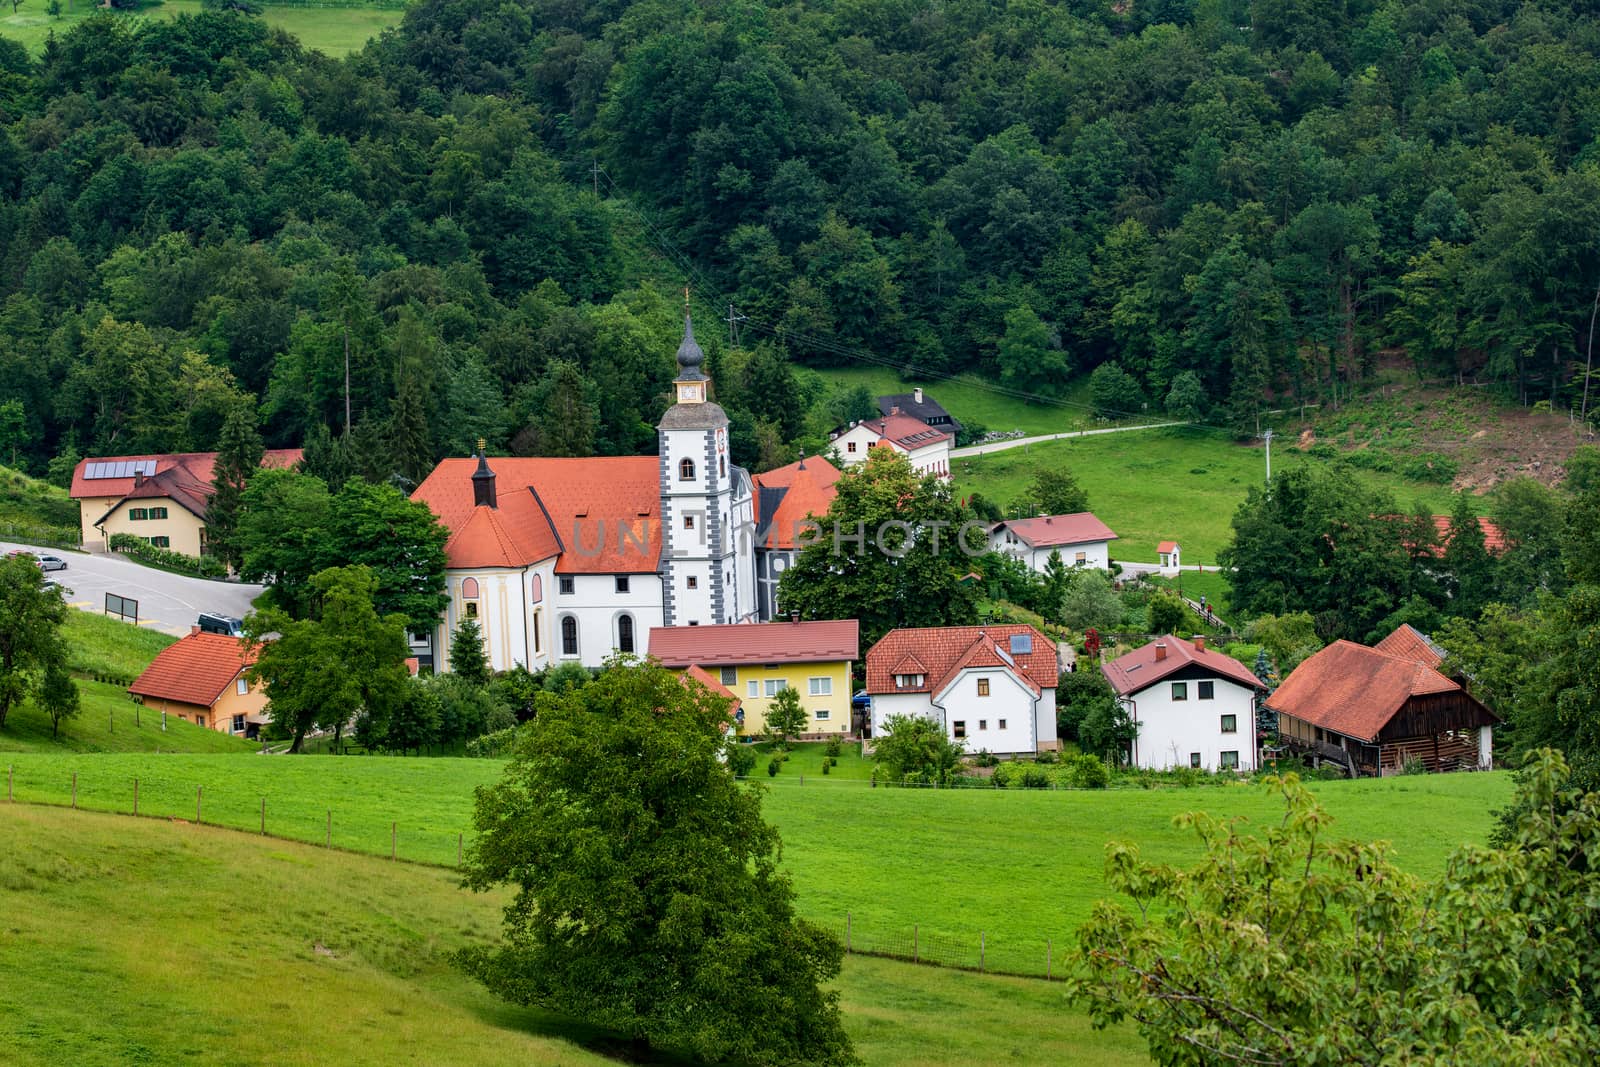 Village Olimje near Podcetrtek, Slovenia with Monastery in Olimje with surroundings